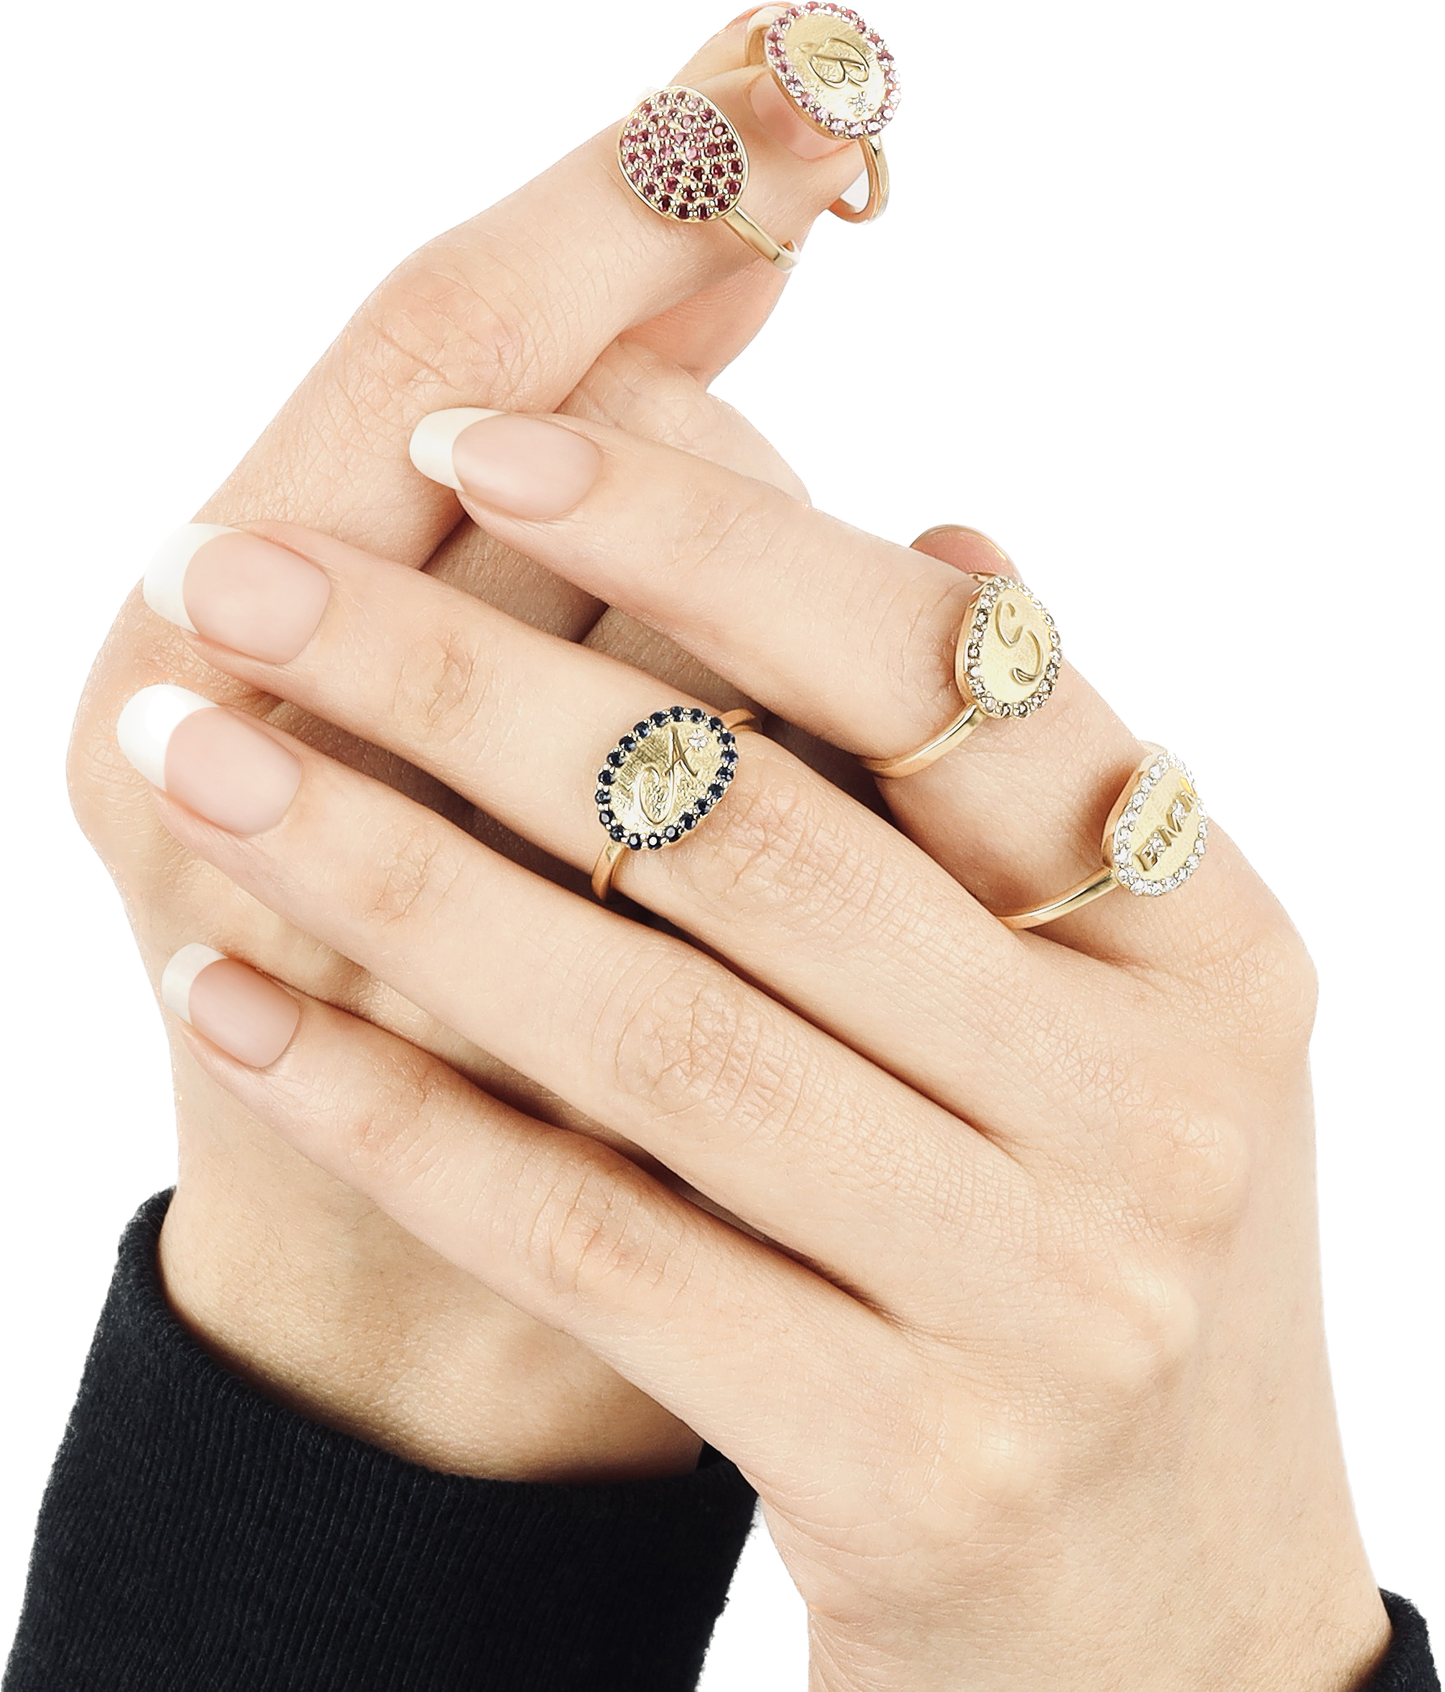 Danielle Morgan Jewelry - 18k initial ring